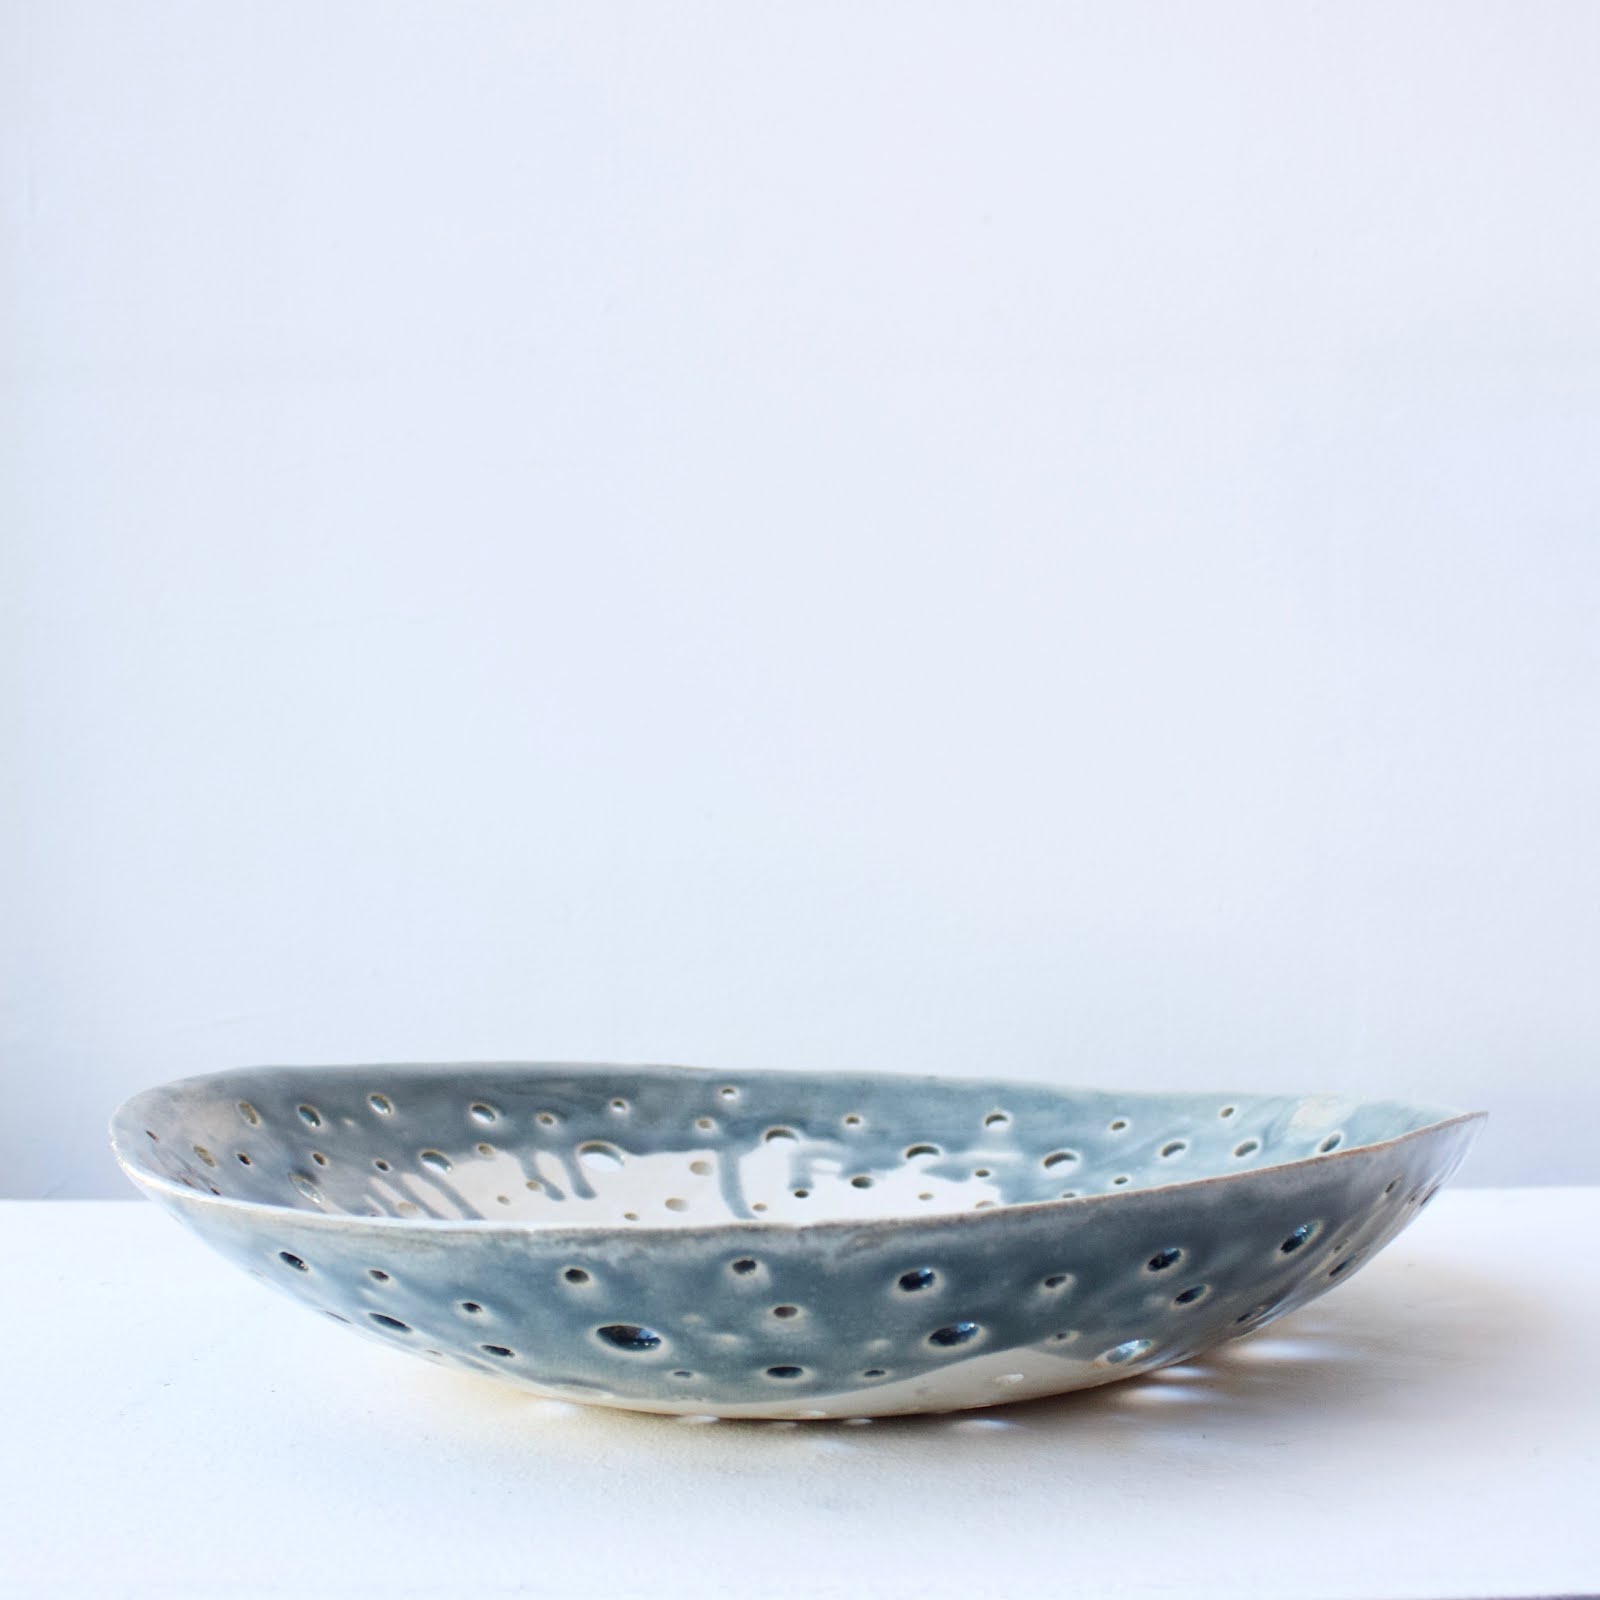 Handmade ceramic fruit bowl - SOLD